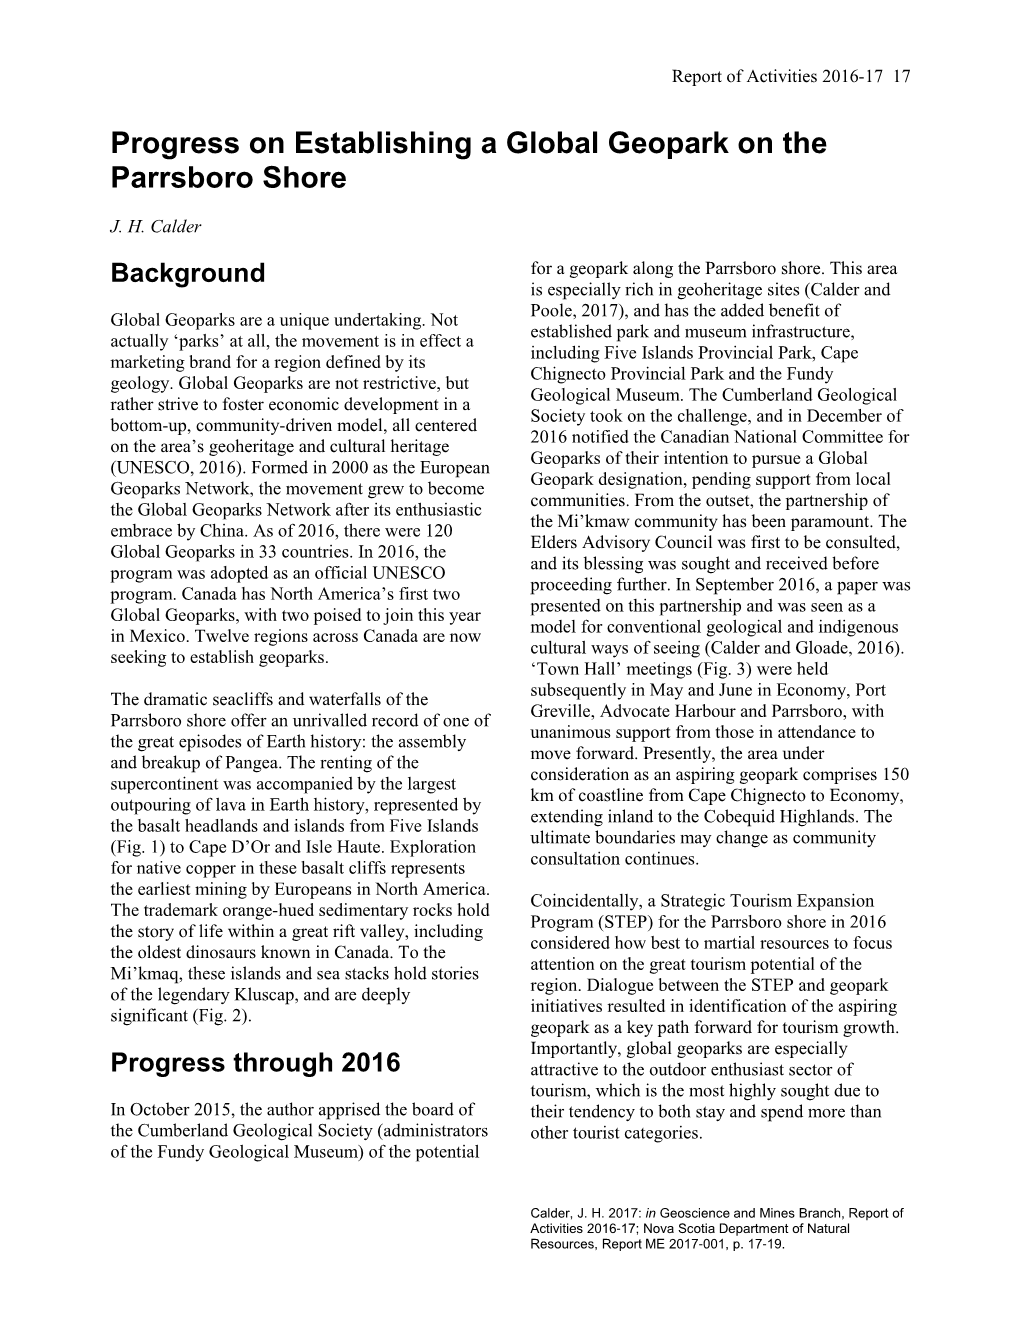 Progress on Establishing a Global Geopark on the Parrsboro Shore